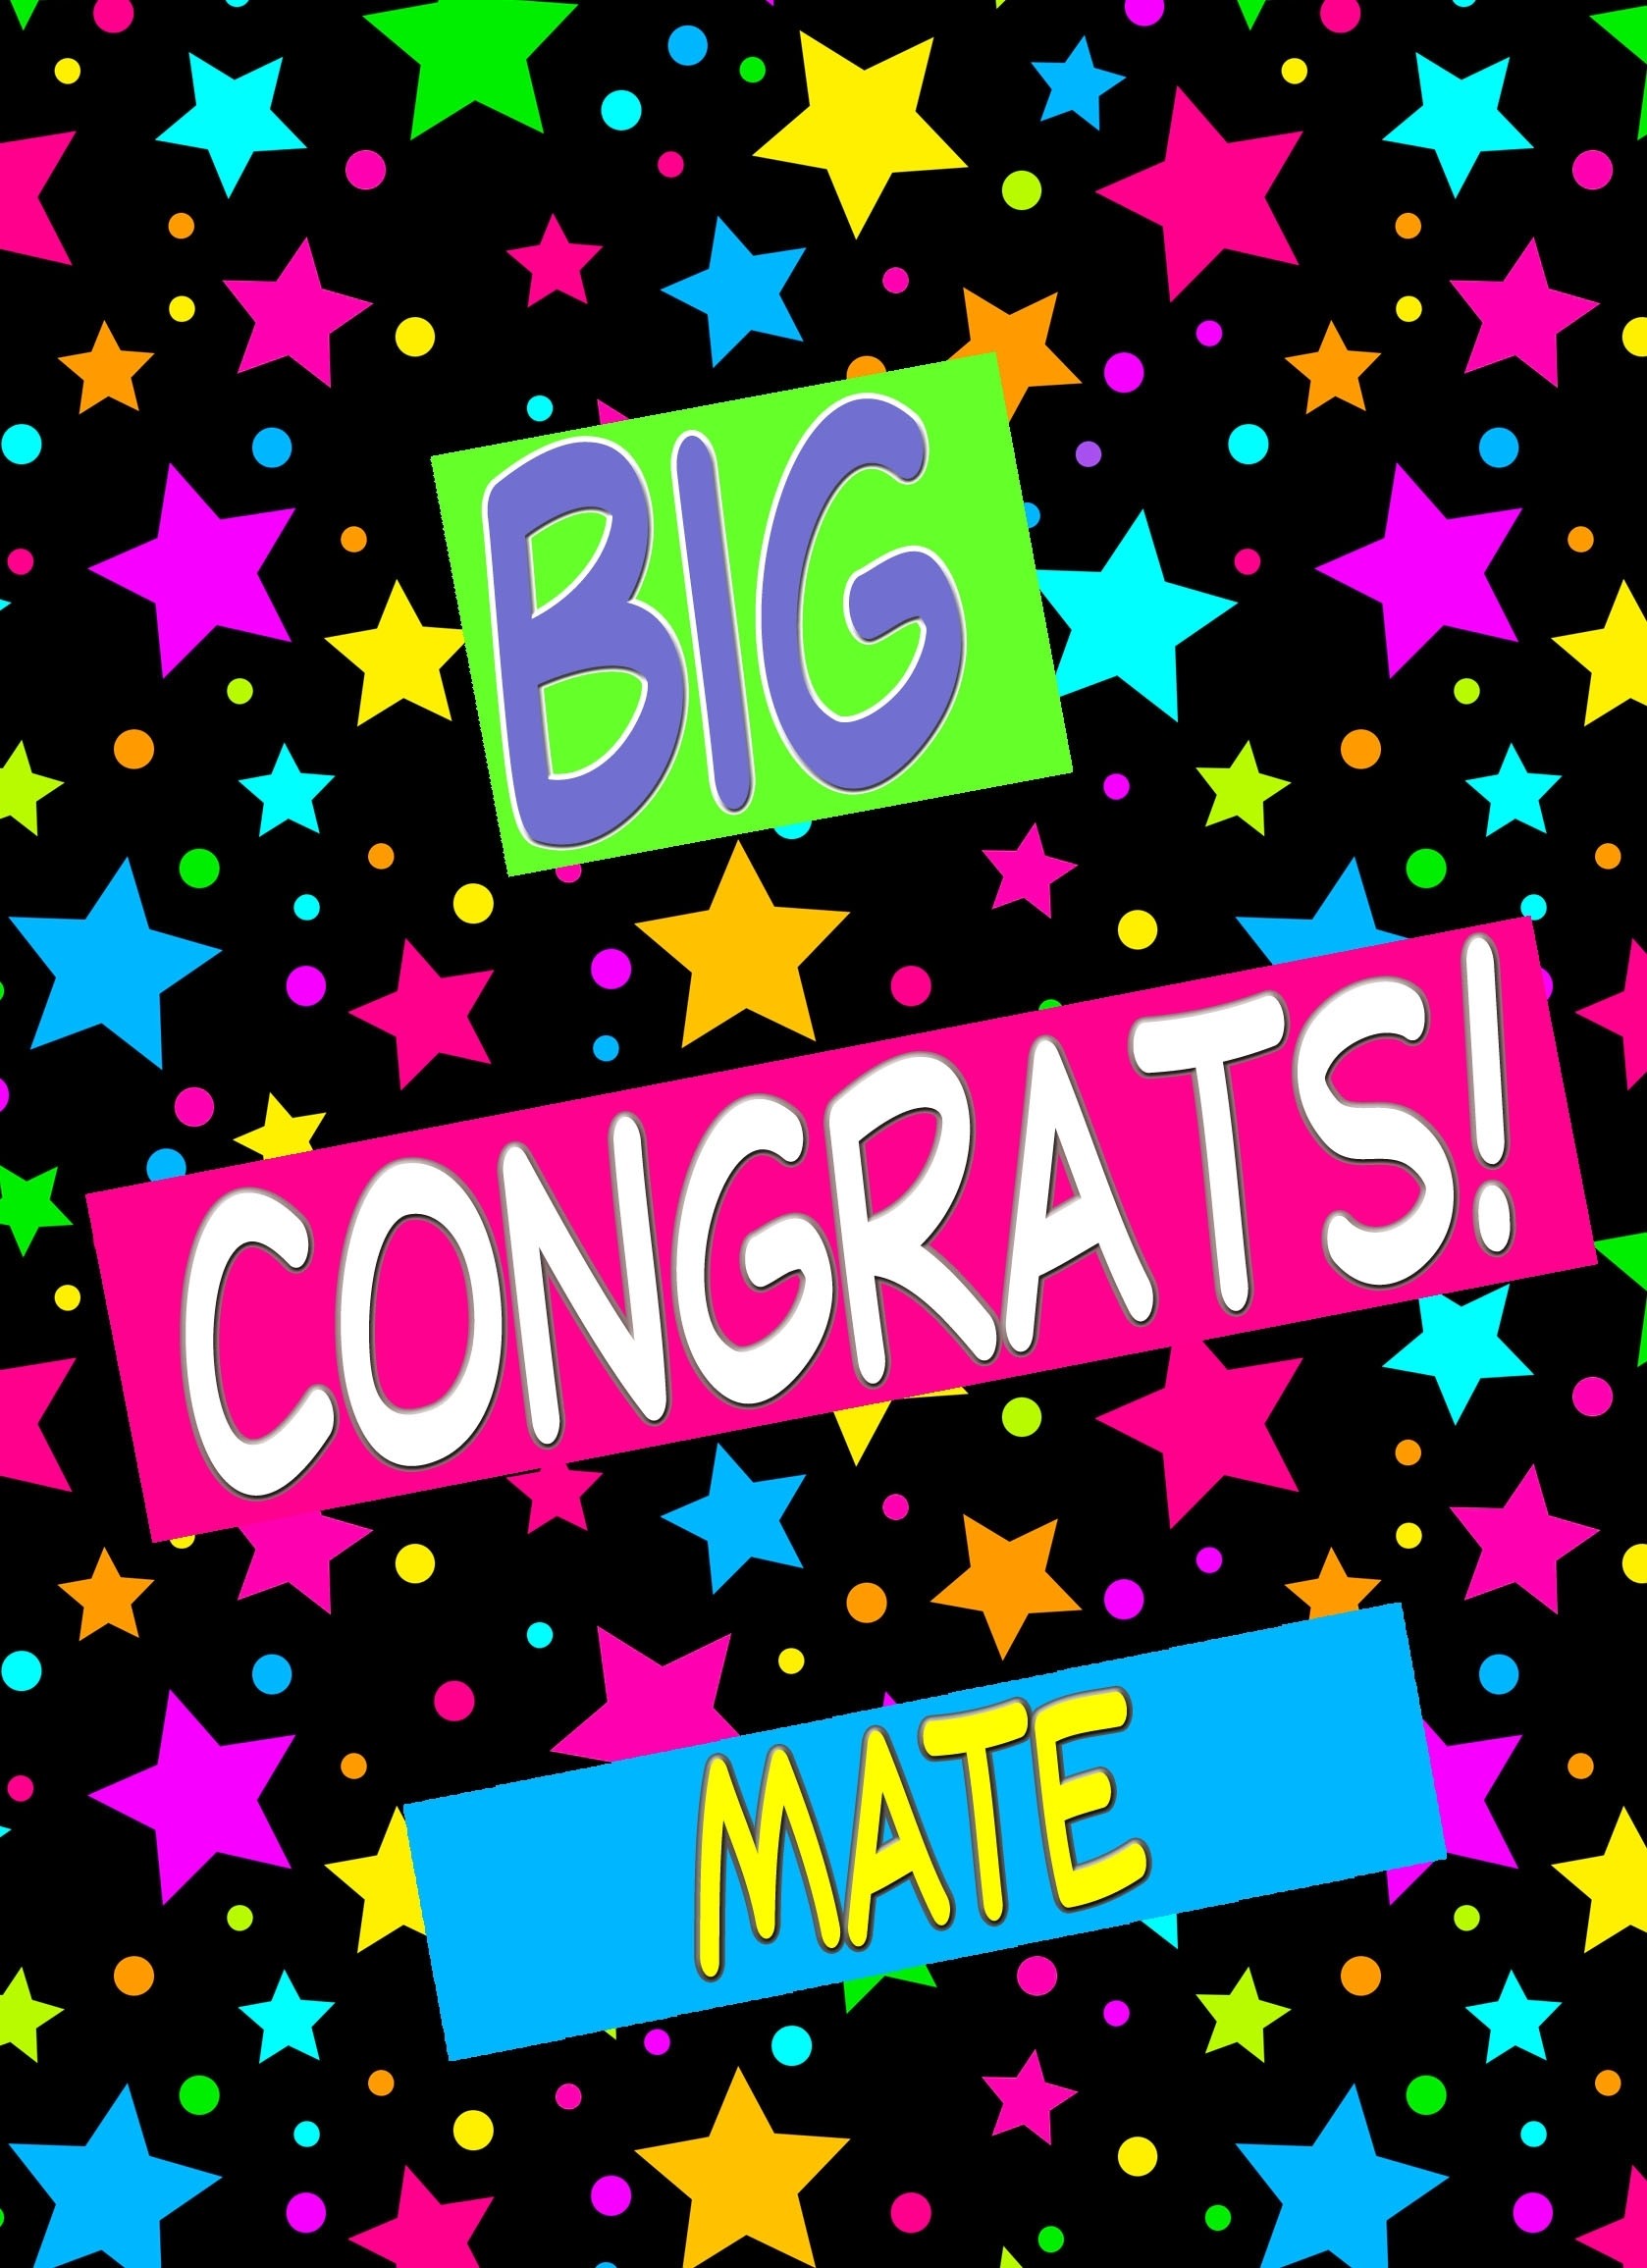 Congratulations Card For Mate (Stars)